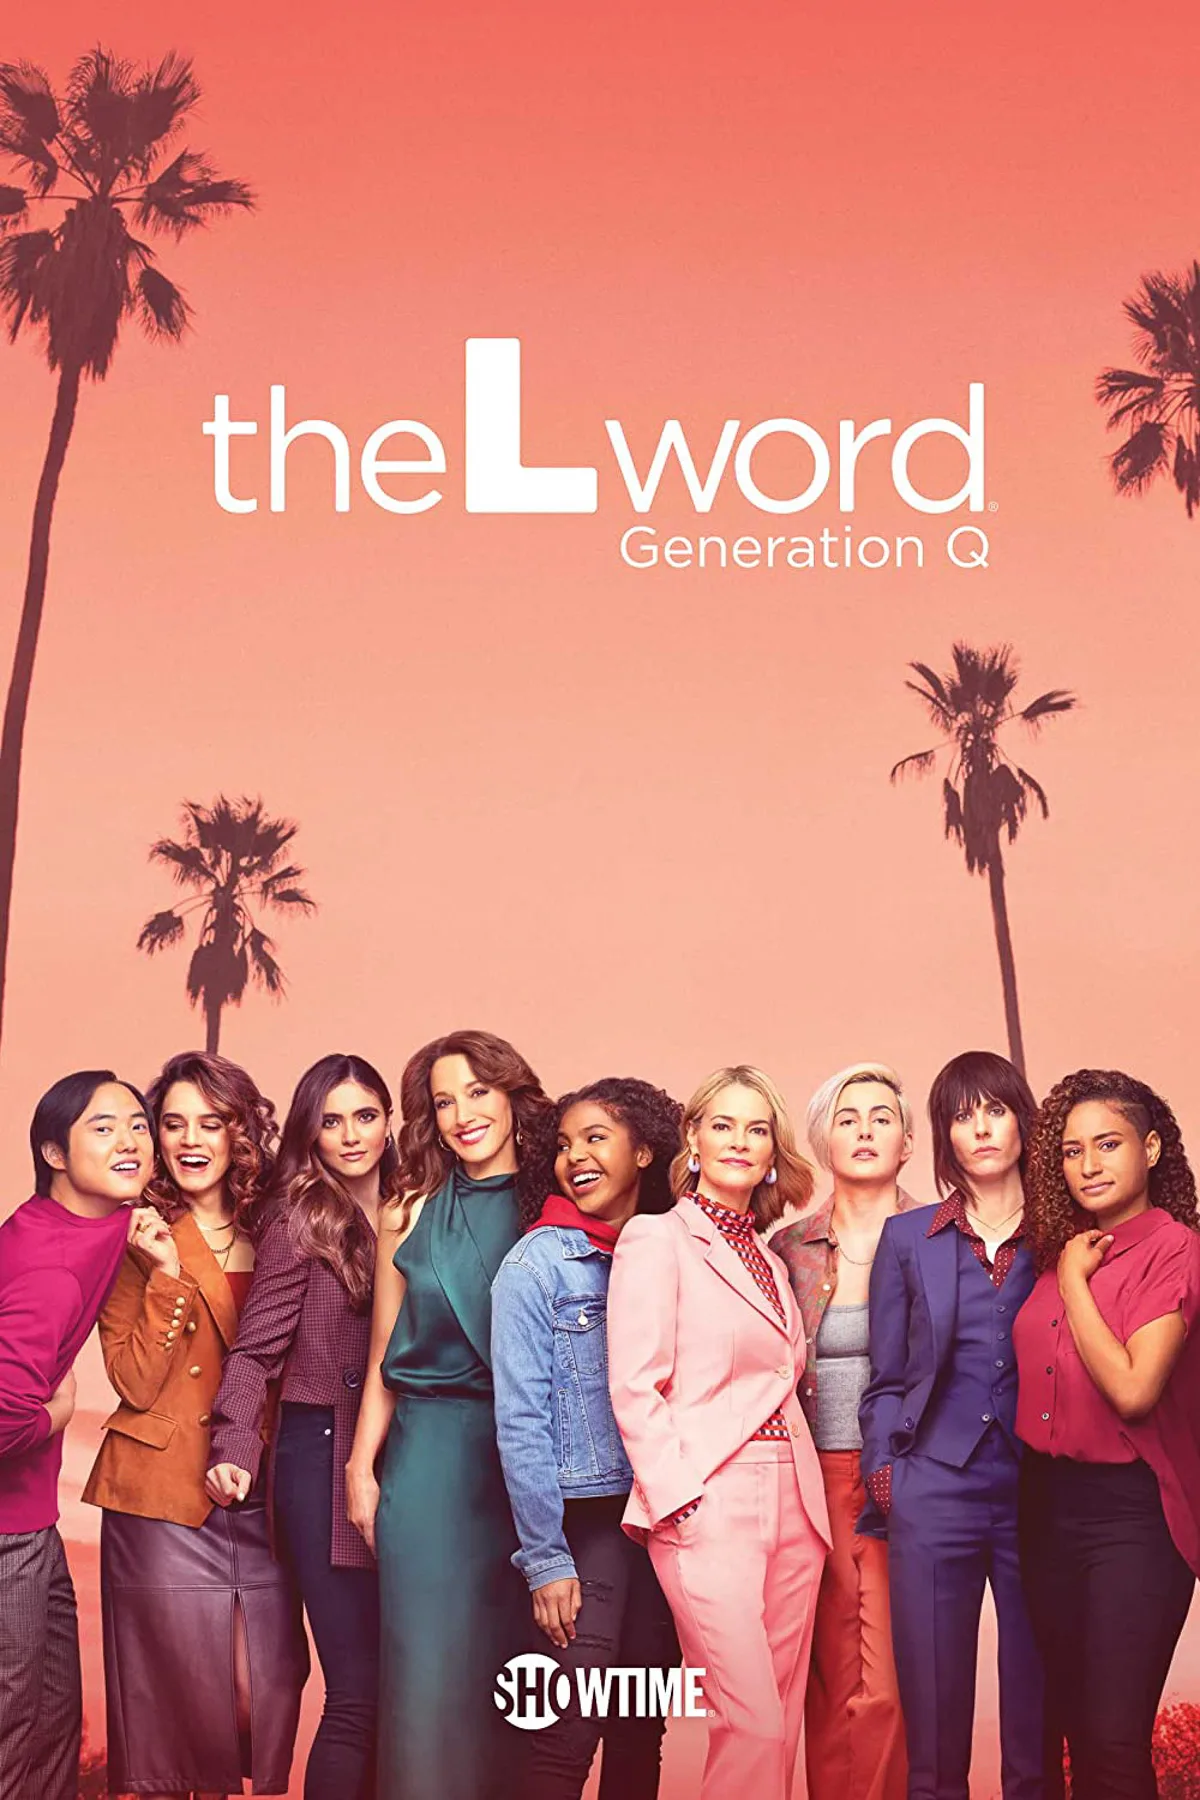 The L Word Generation Q 2019 Showtime Lesbian show